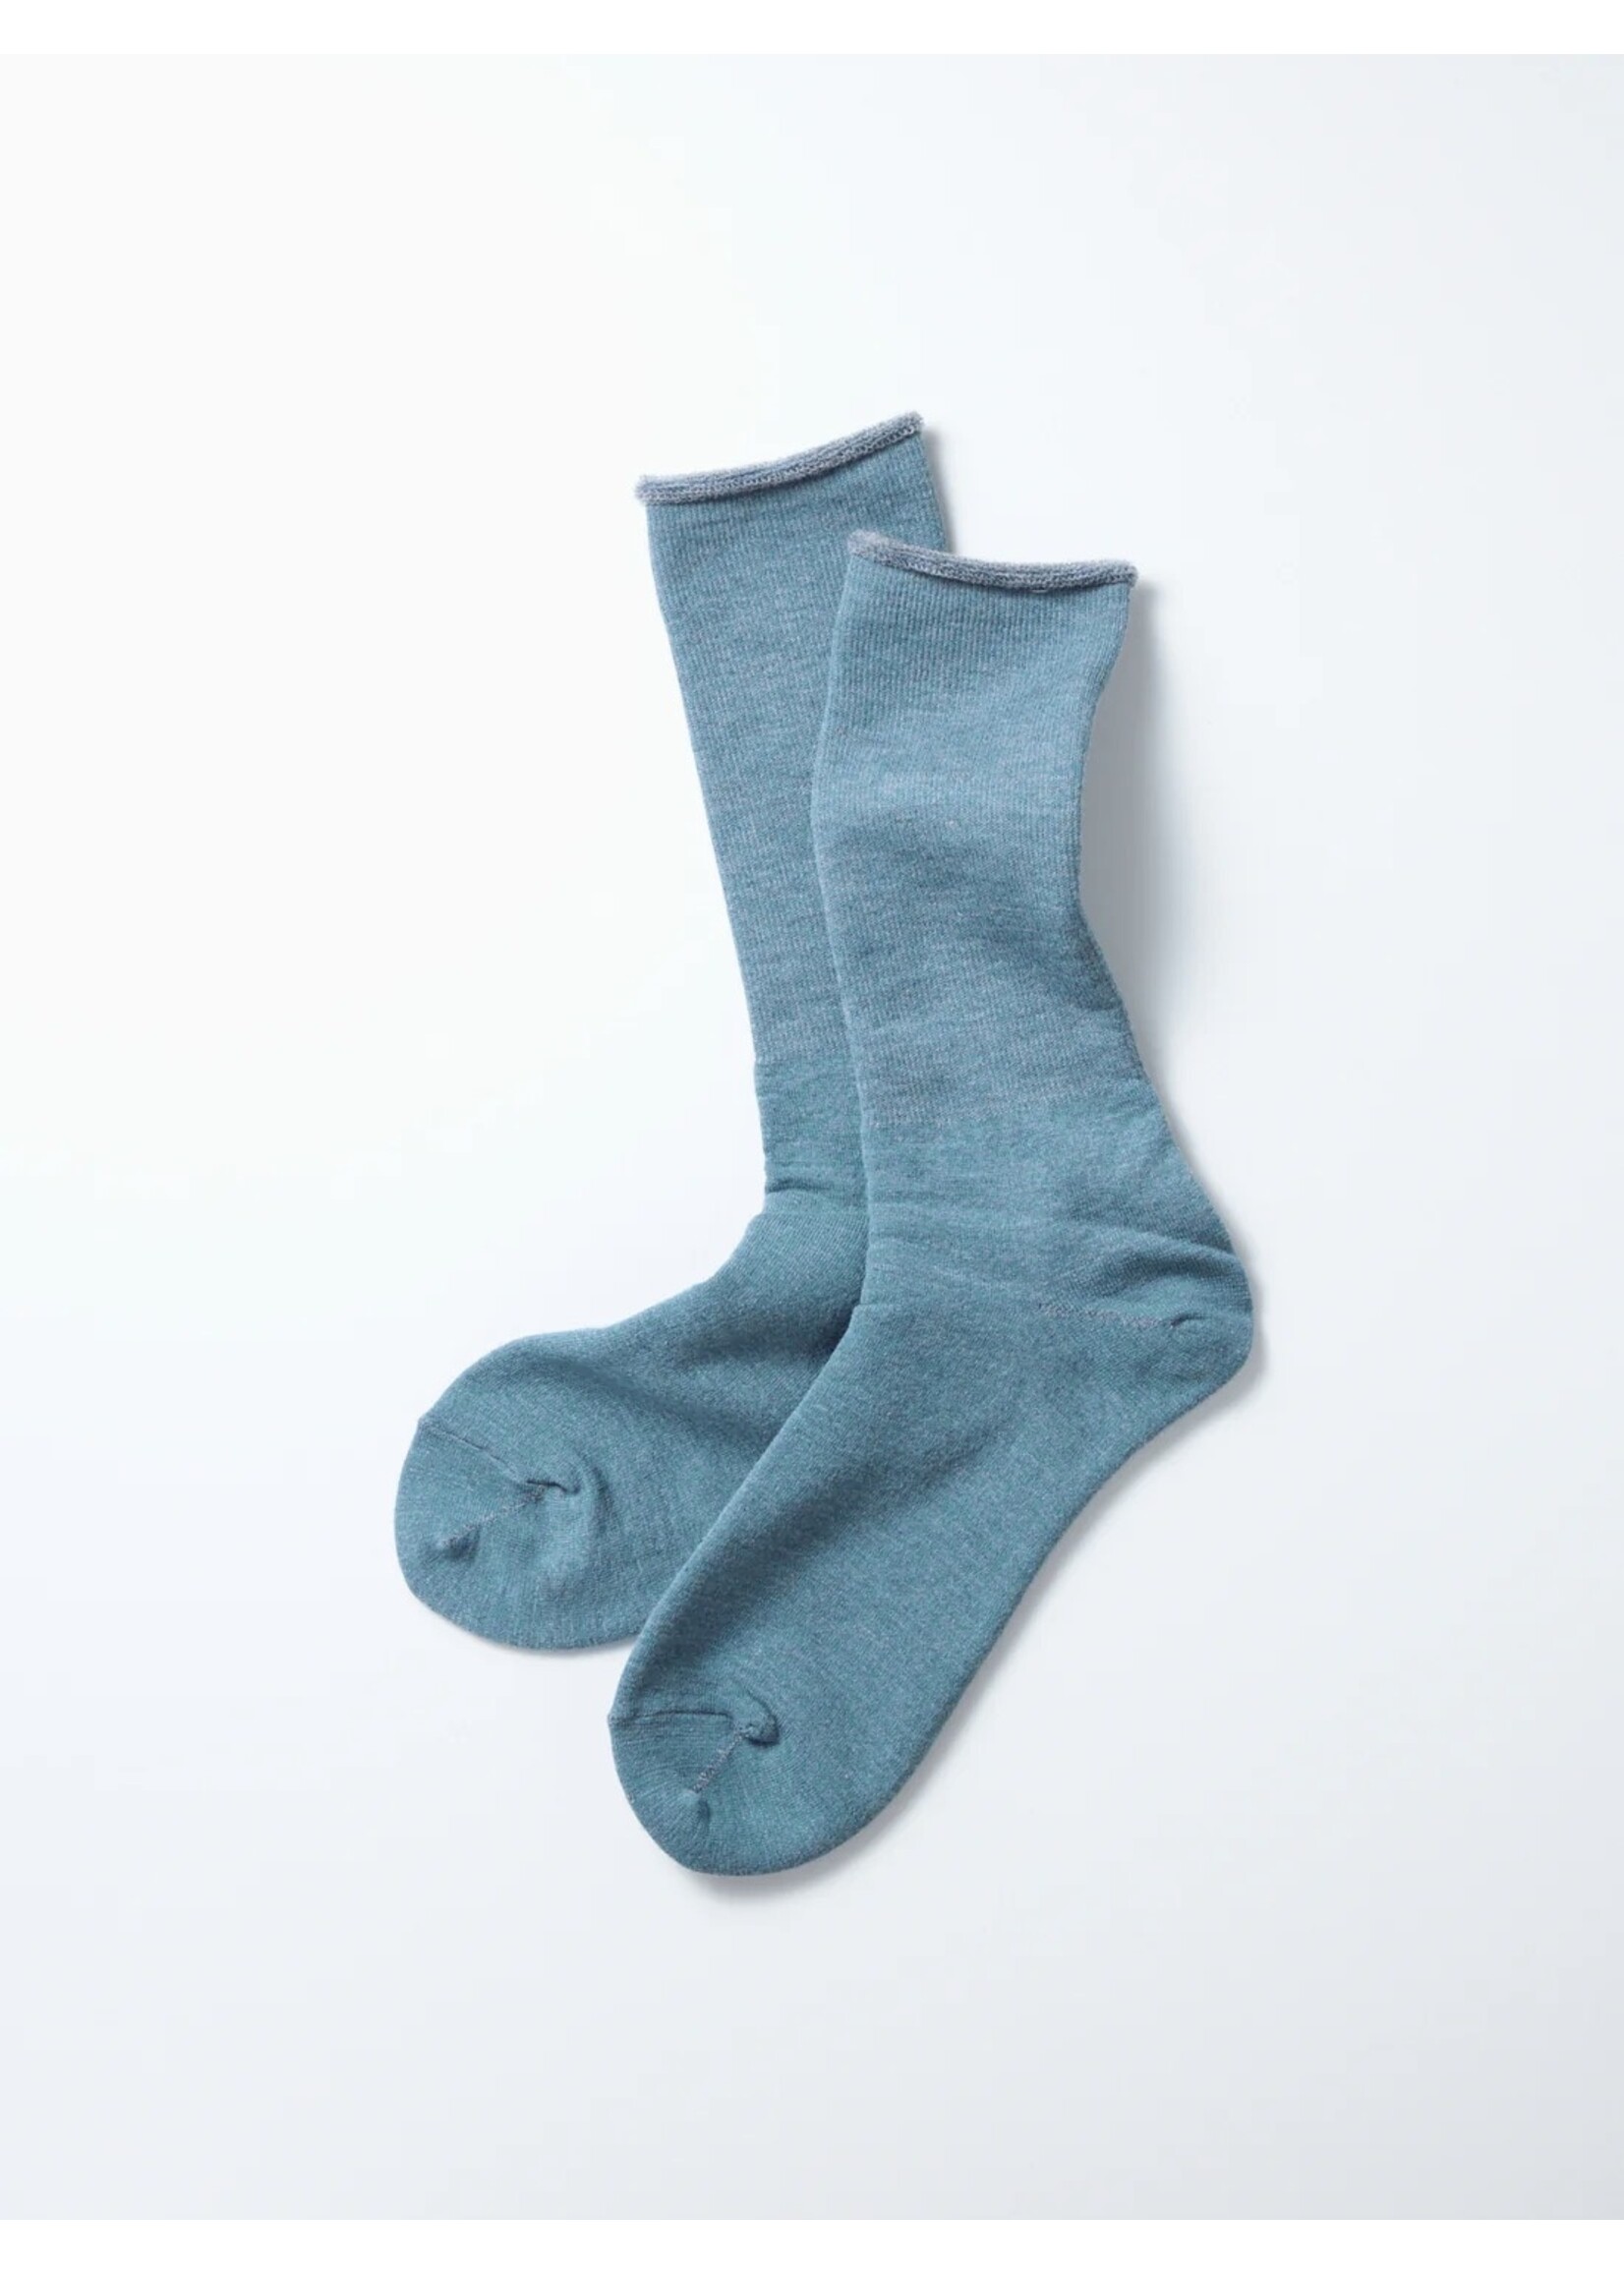 Rototo Ultimate comfort socks "City Socks" by ROTOTO